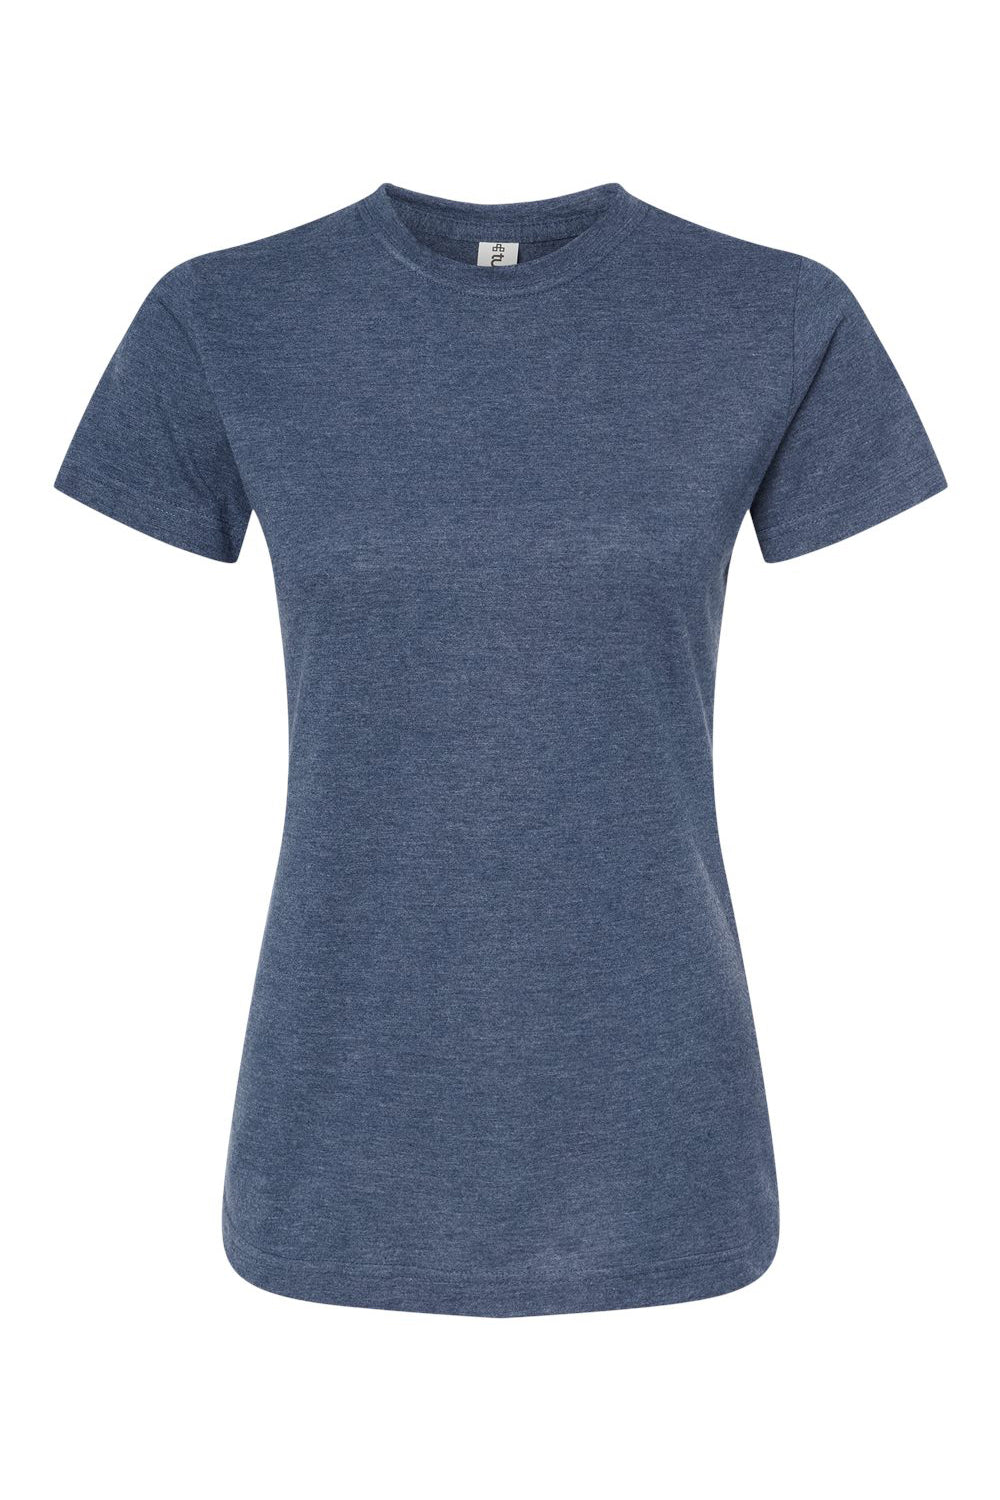 Tultex 216 Womens Fine Jersey Classic Fit Short Sleeve Crewneck T-Shirt Heather Denim Blue Flat Front